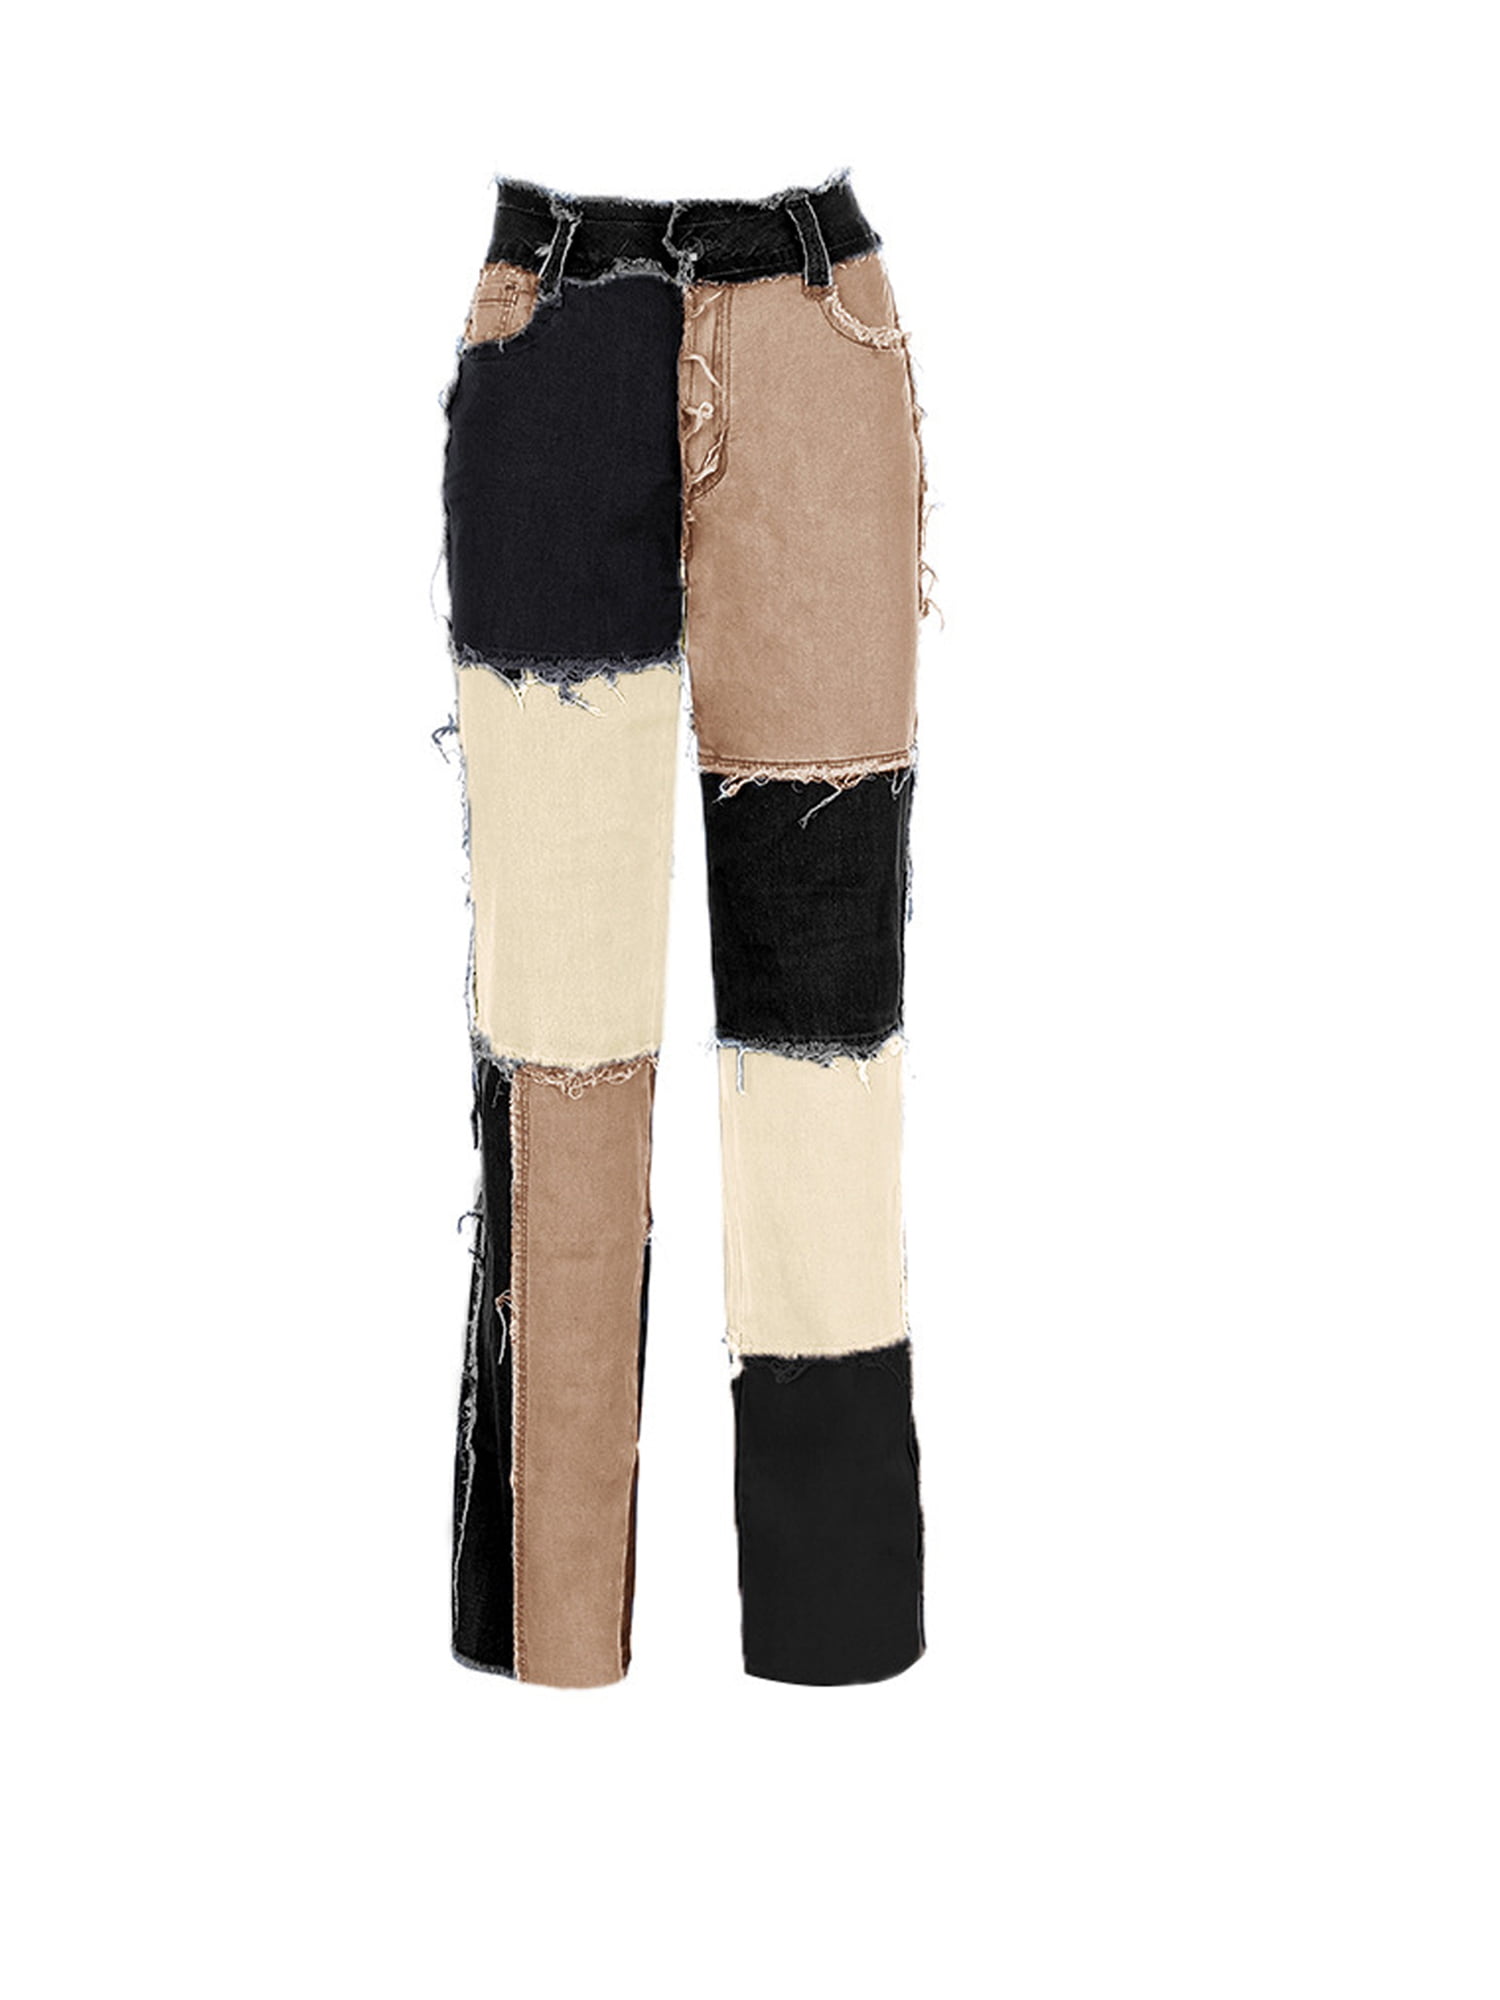 MEKO Fabric Pants Nicypants Women/'s Taupe Floral Carrot Pants with High Waist Highwaist WaistFold Pants